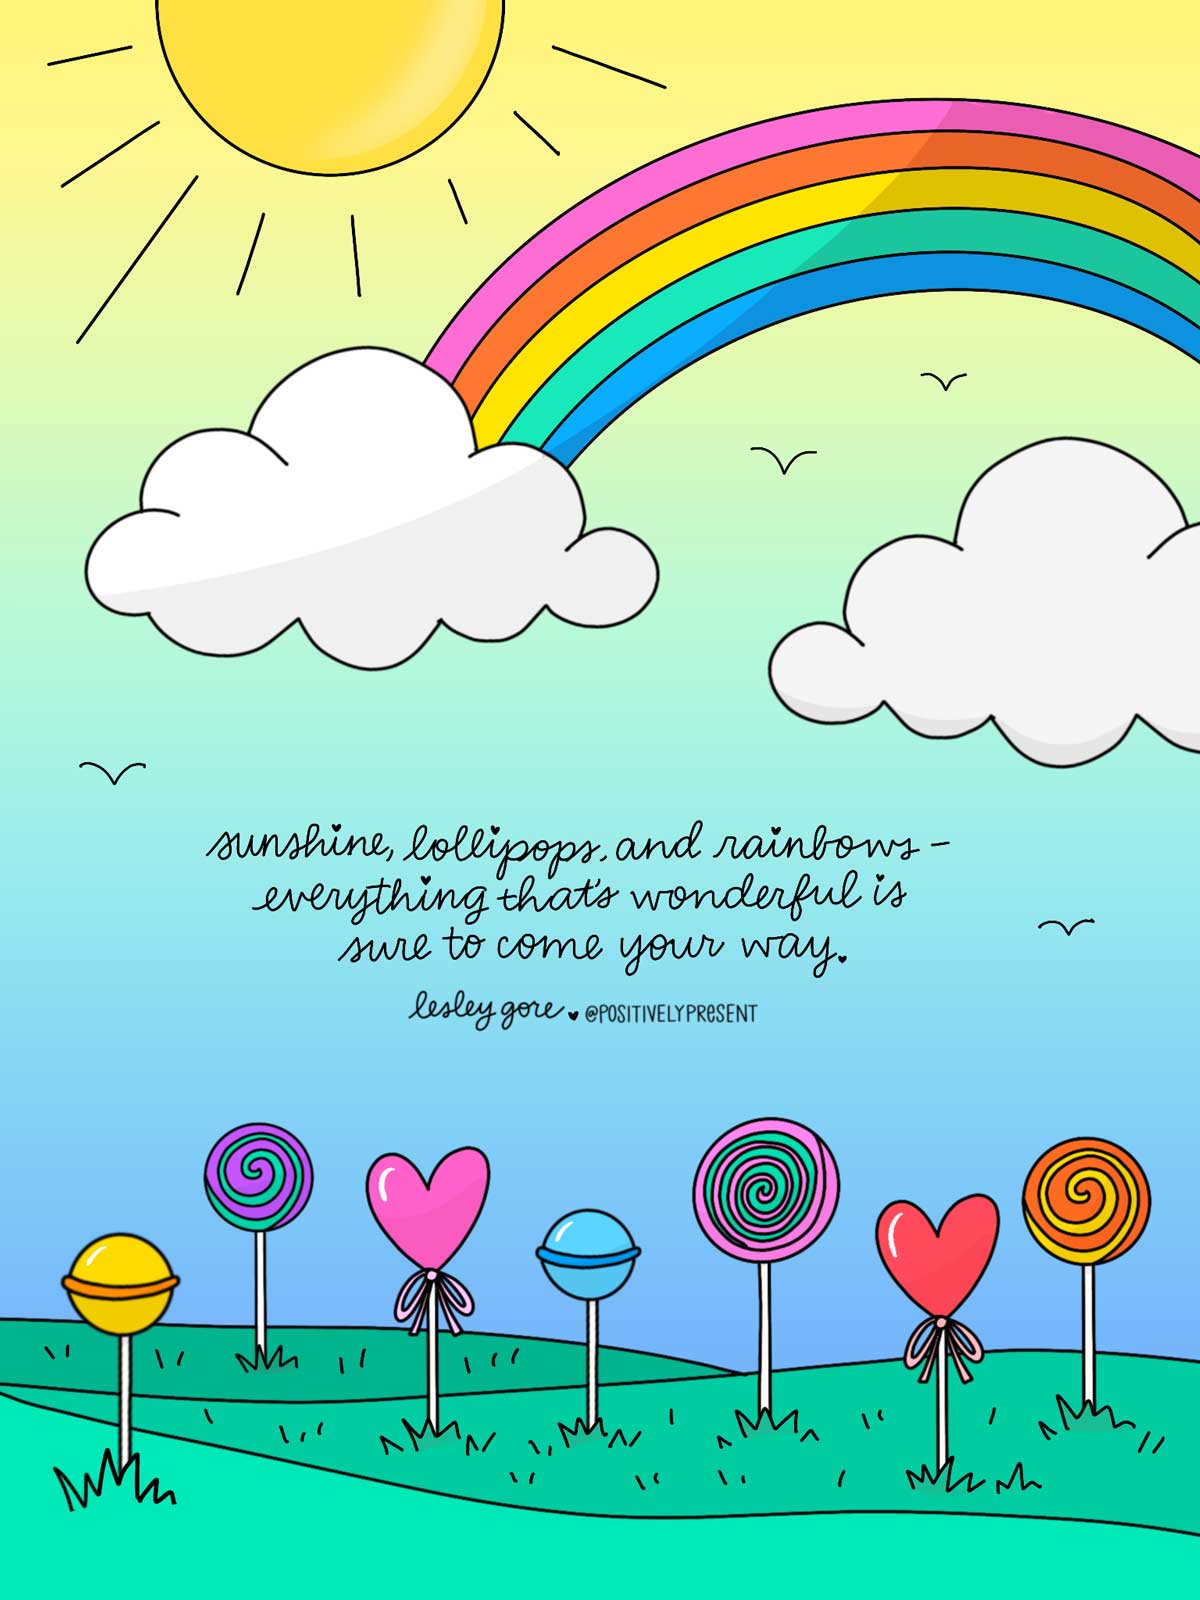 illustration of rainbow in sunny sky with lollipops growing has sunshine, rainbows, lollipops lyrics.